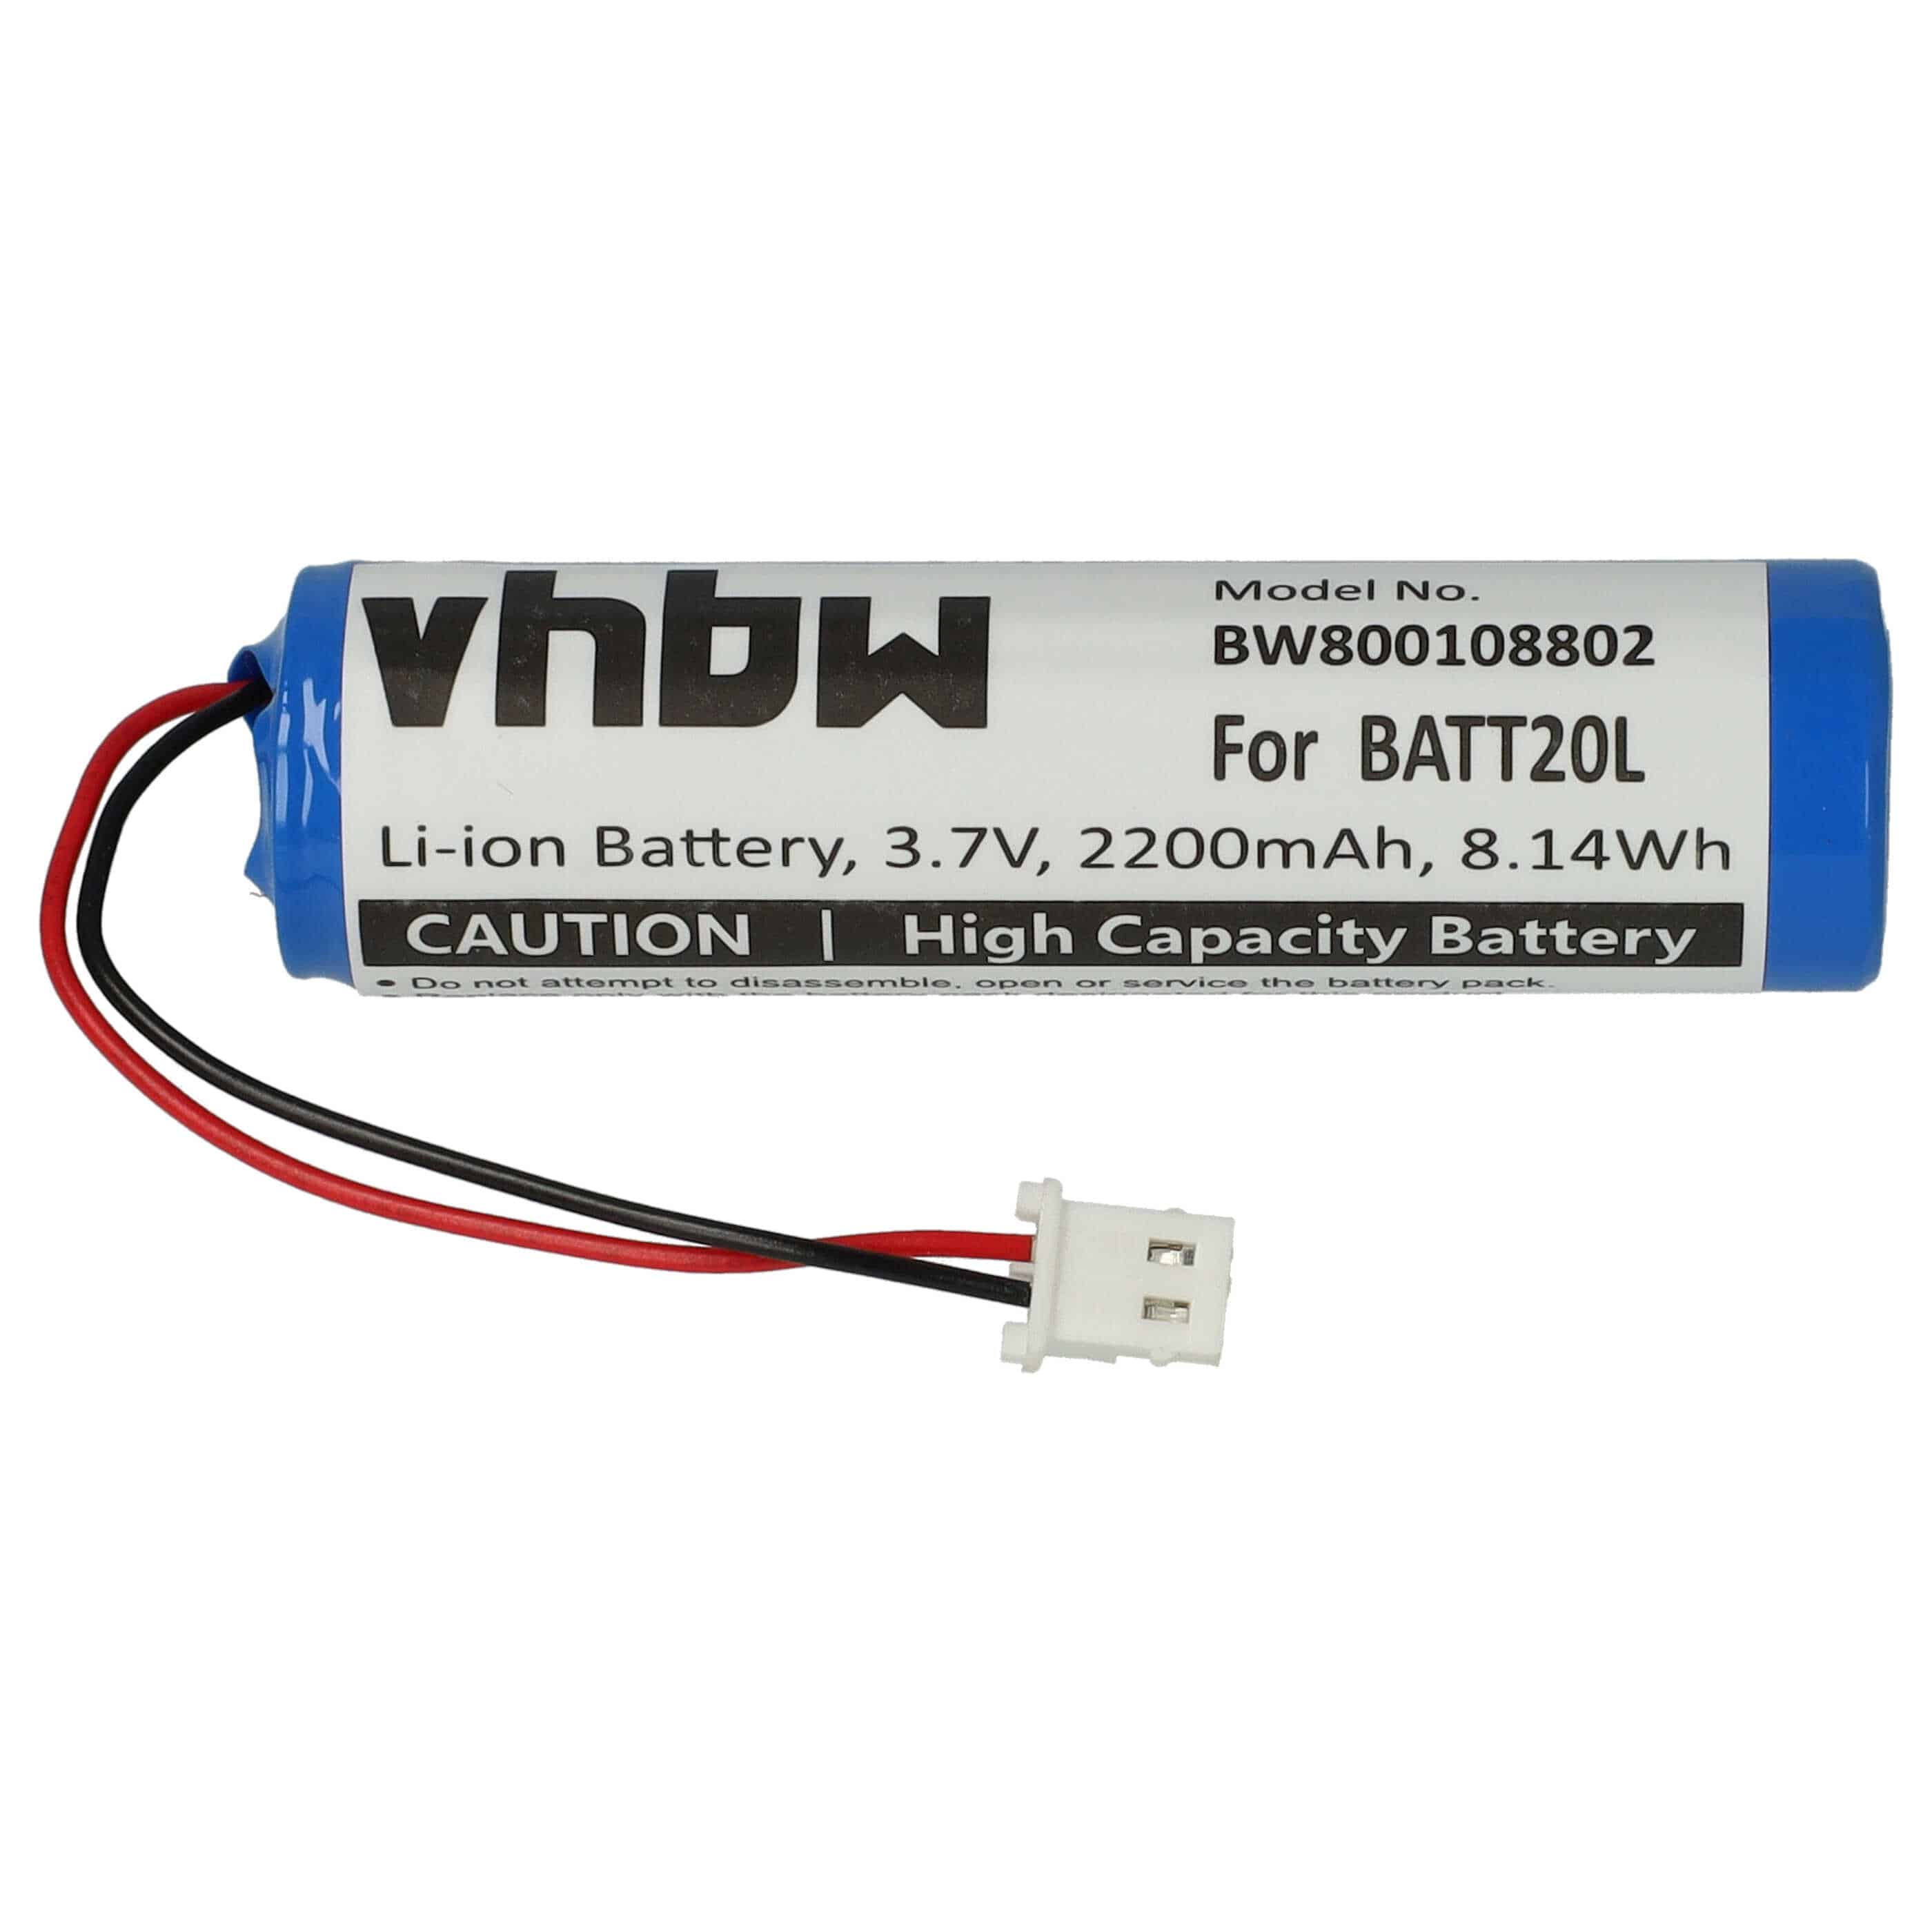 DAB Radio Battery Replacement for BATT20L - 2200mAh 3.7V Li-Ion